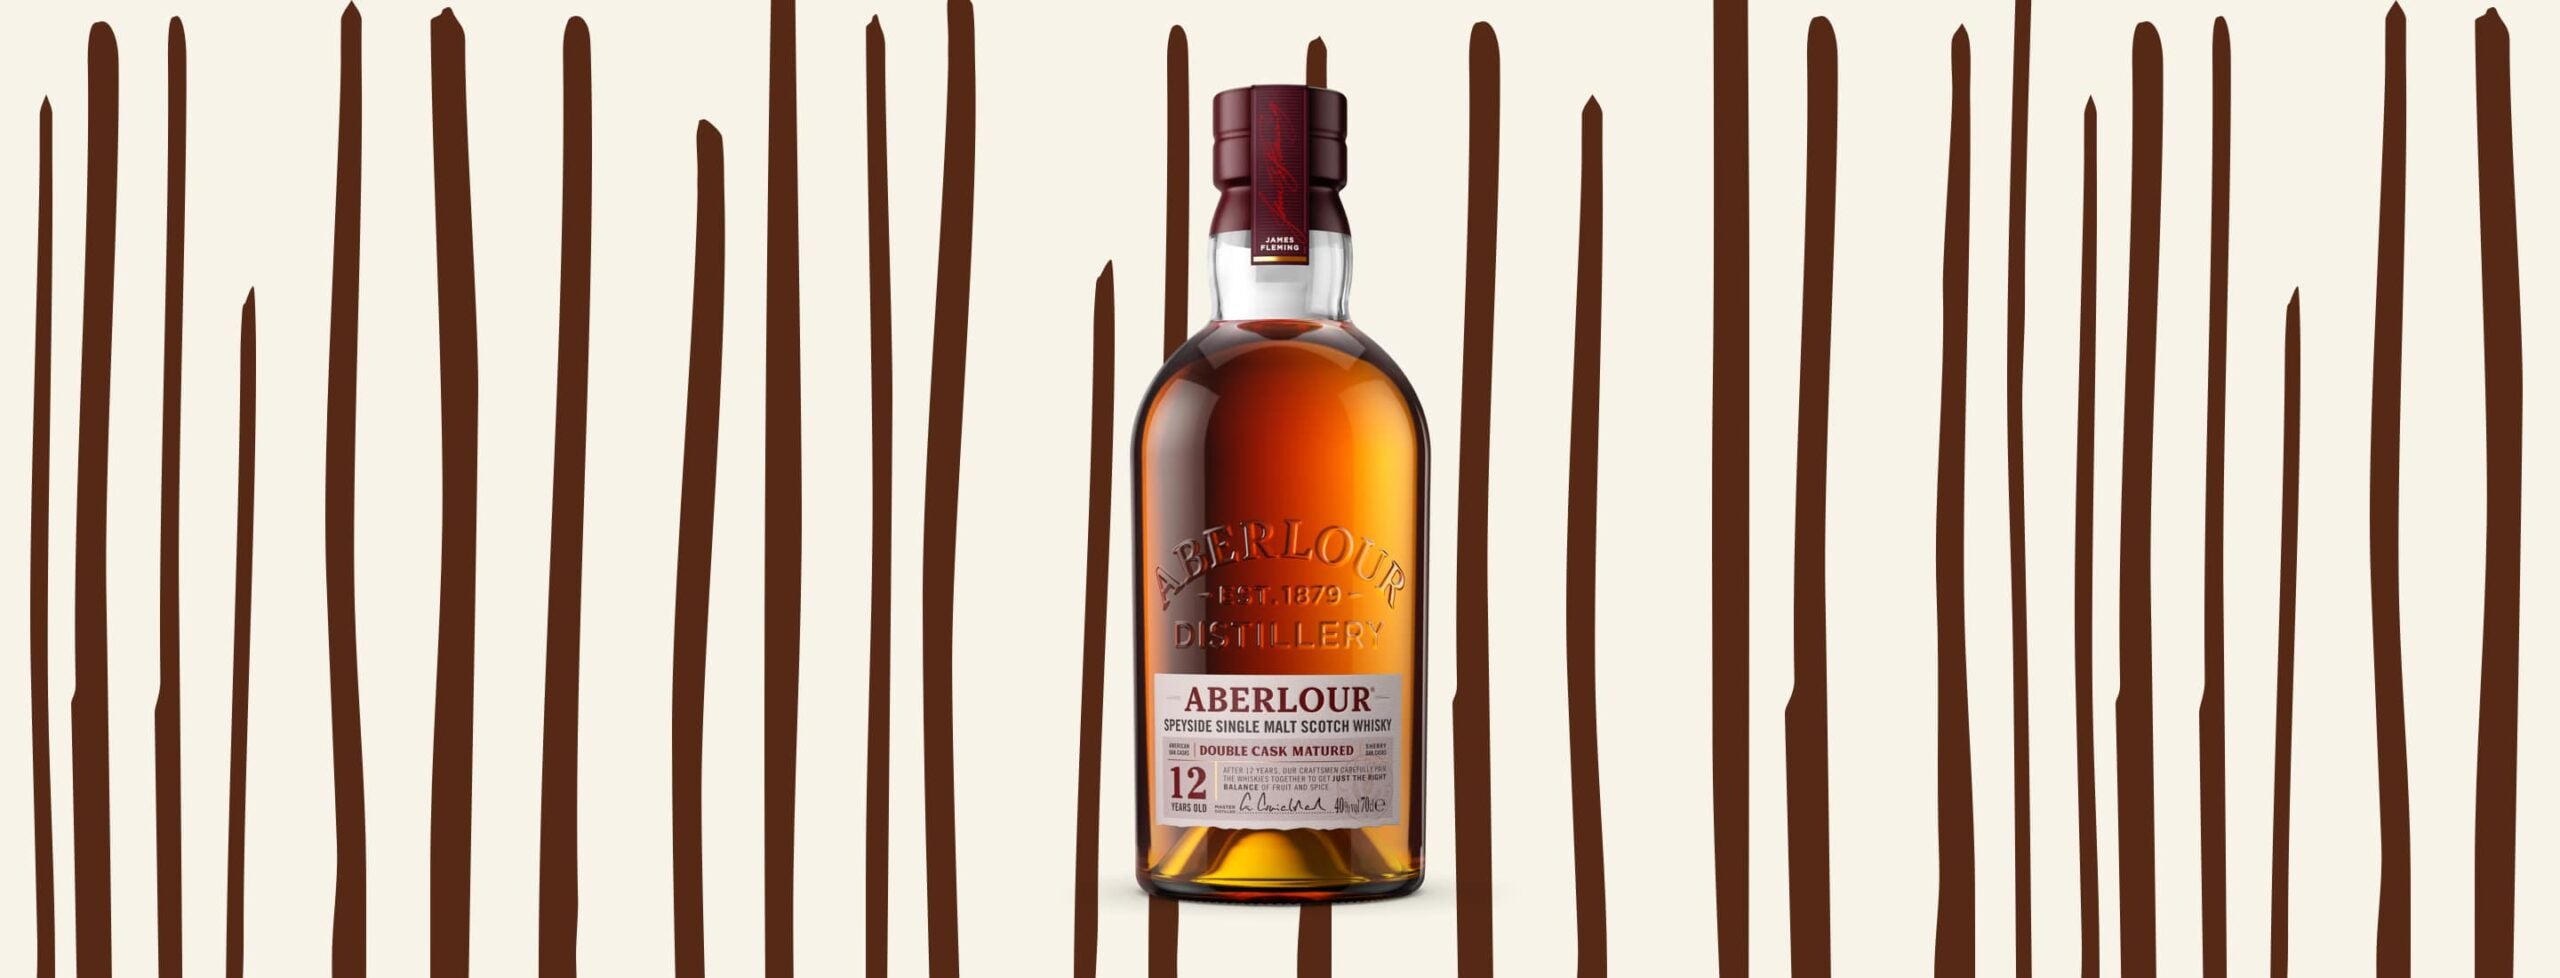 Aberlour Distillery 12 Years Old Speyside Single Malt Scotch Whisky 70cl -  Tesco Groceries